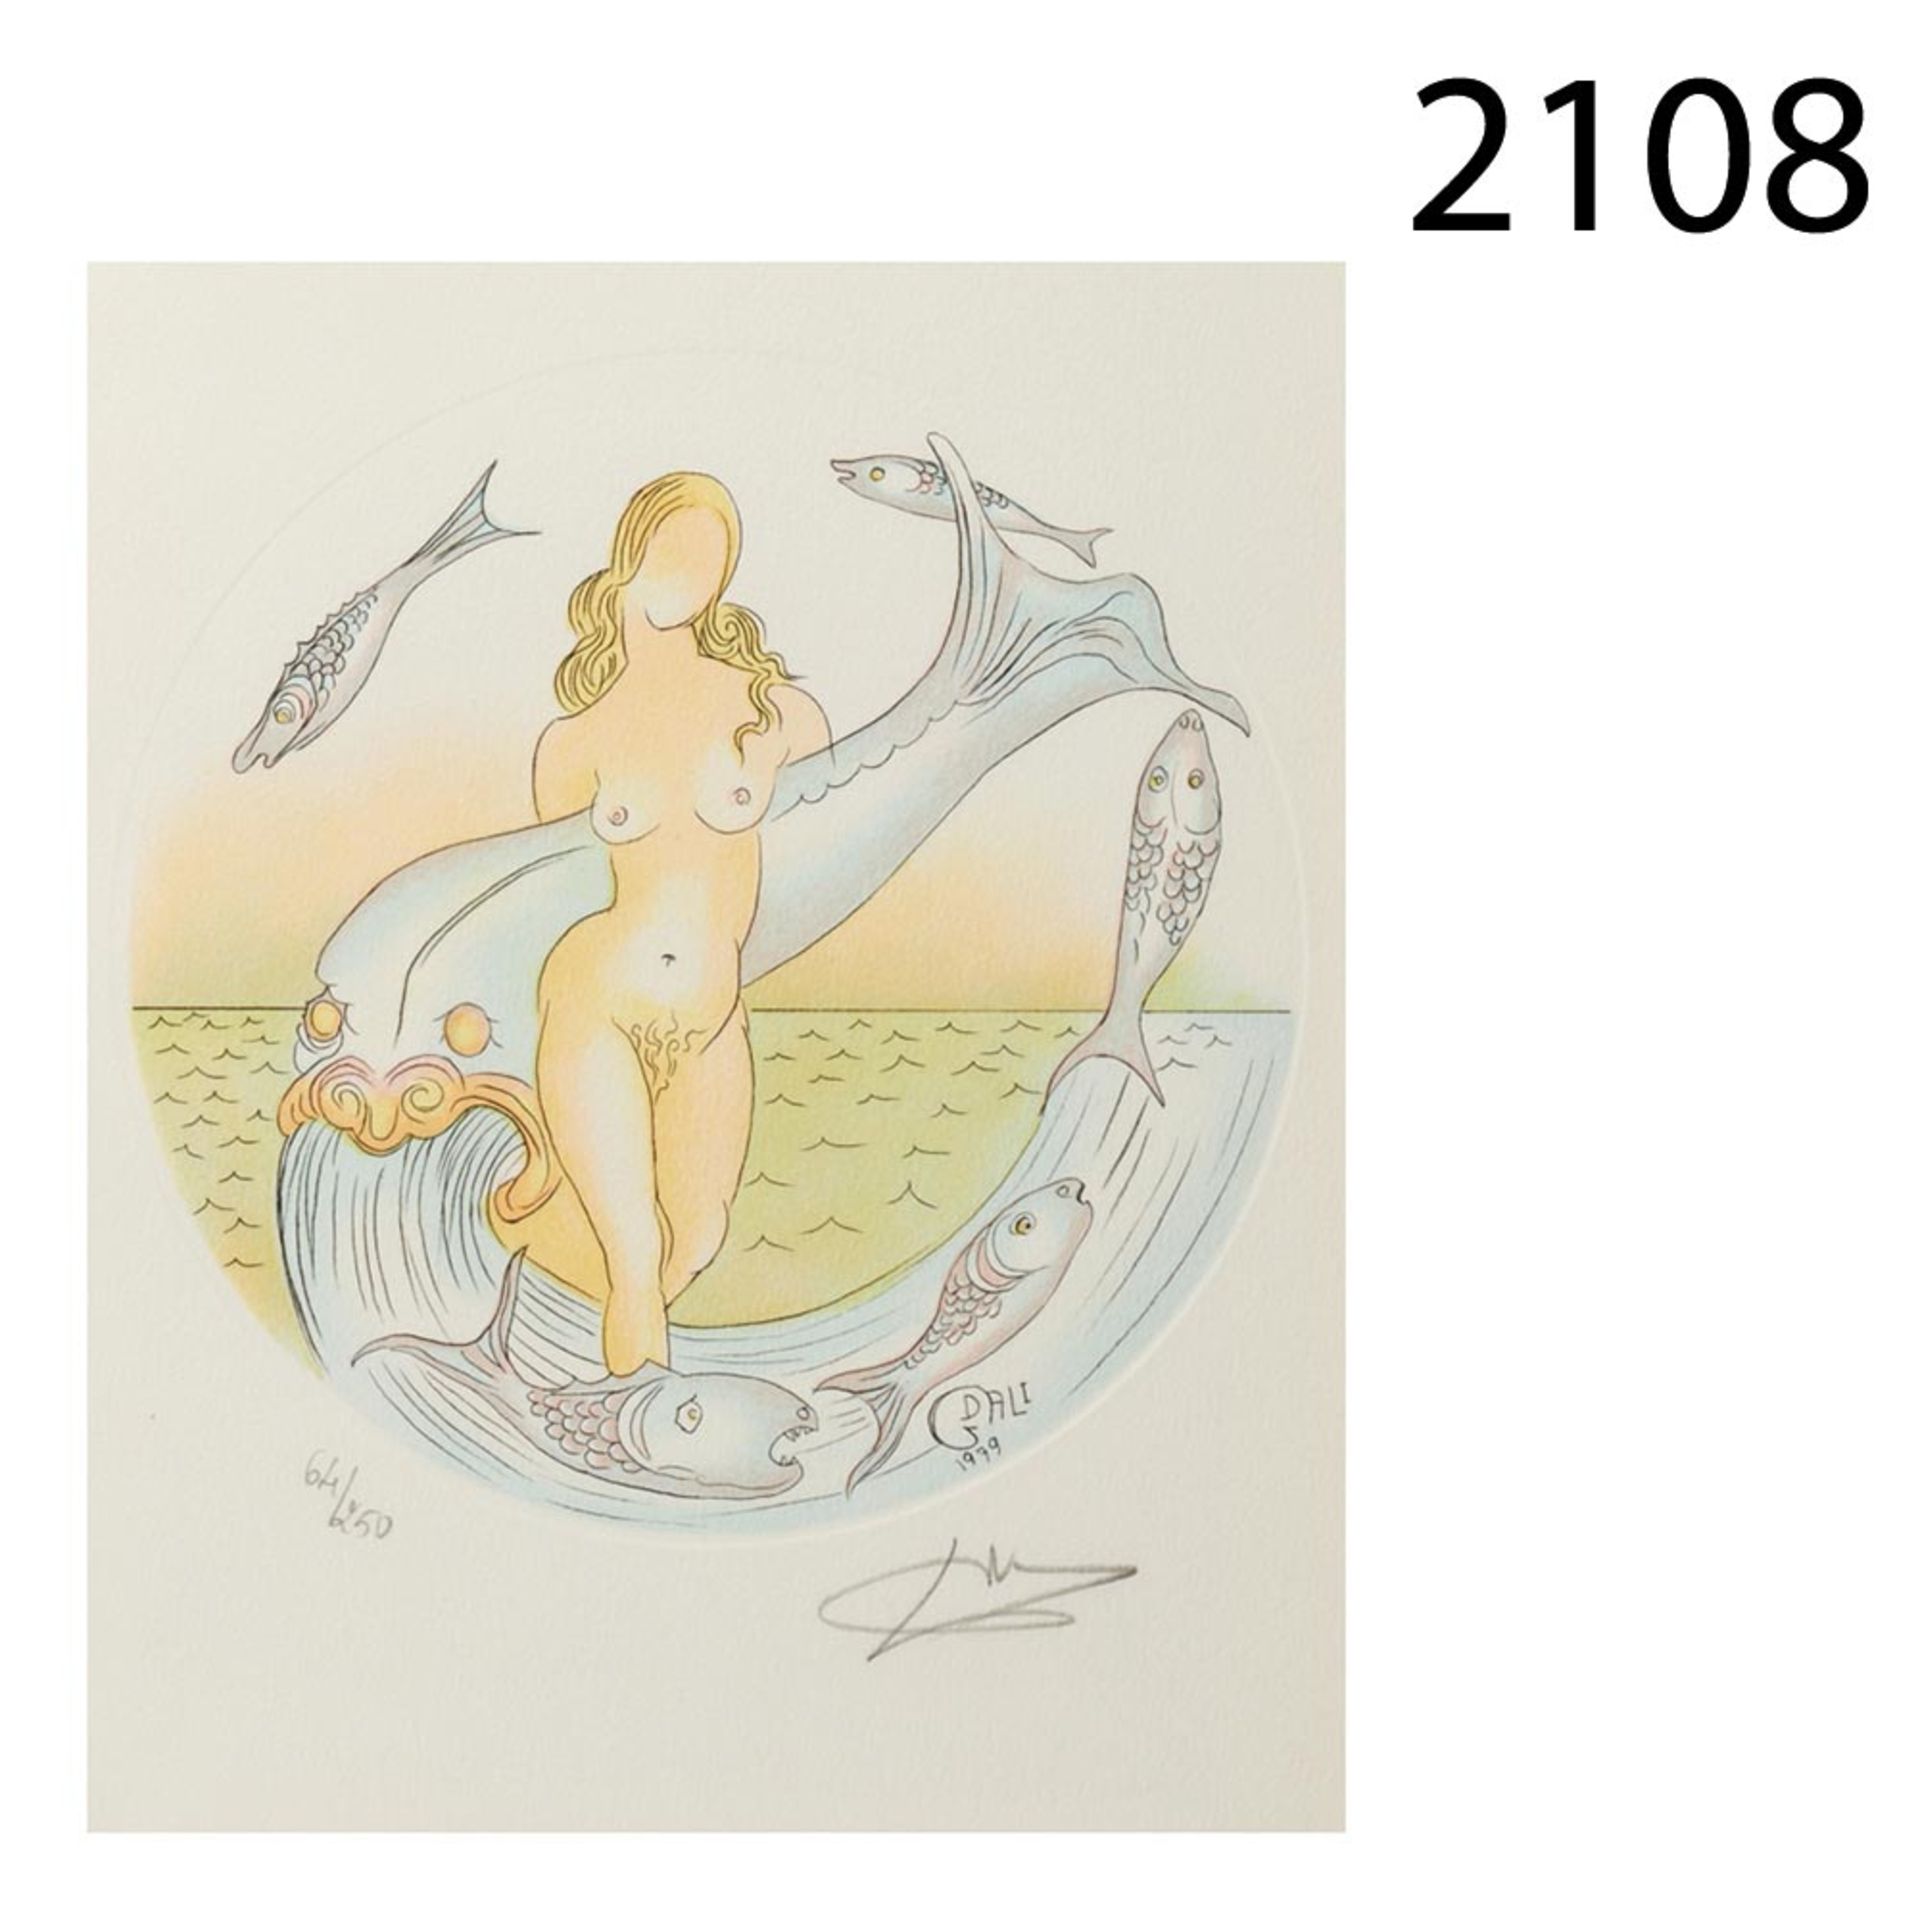 Pisces. Etching Salvador Dalí (Figueres, 1904-1989) Piscis. Grabado firmado y numerado 64/250 a